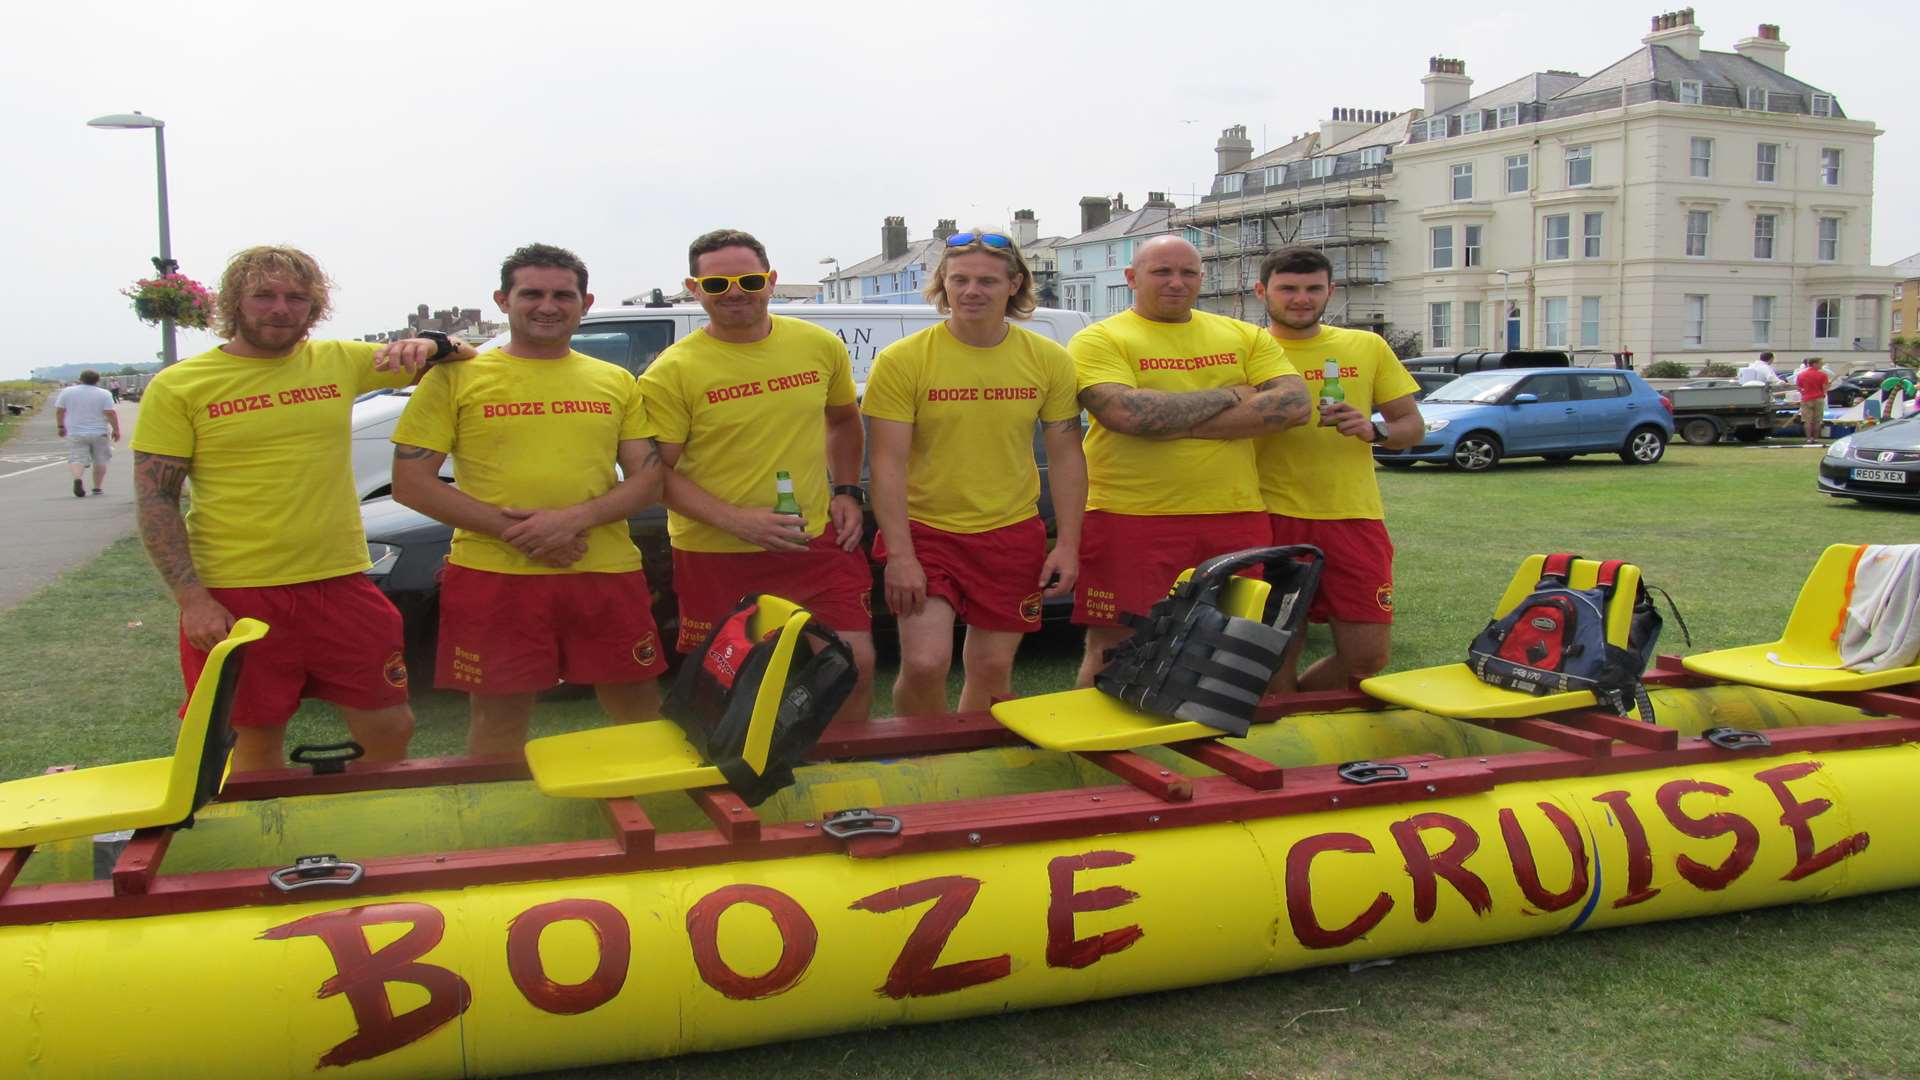 Champion raft racers - Booze Cruise